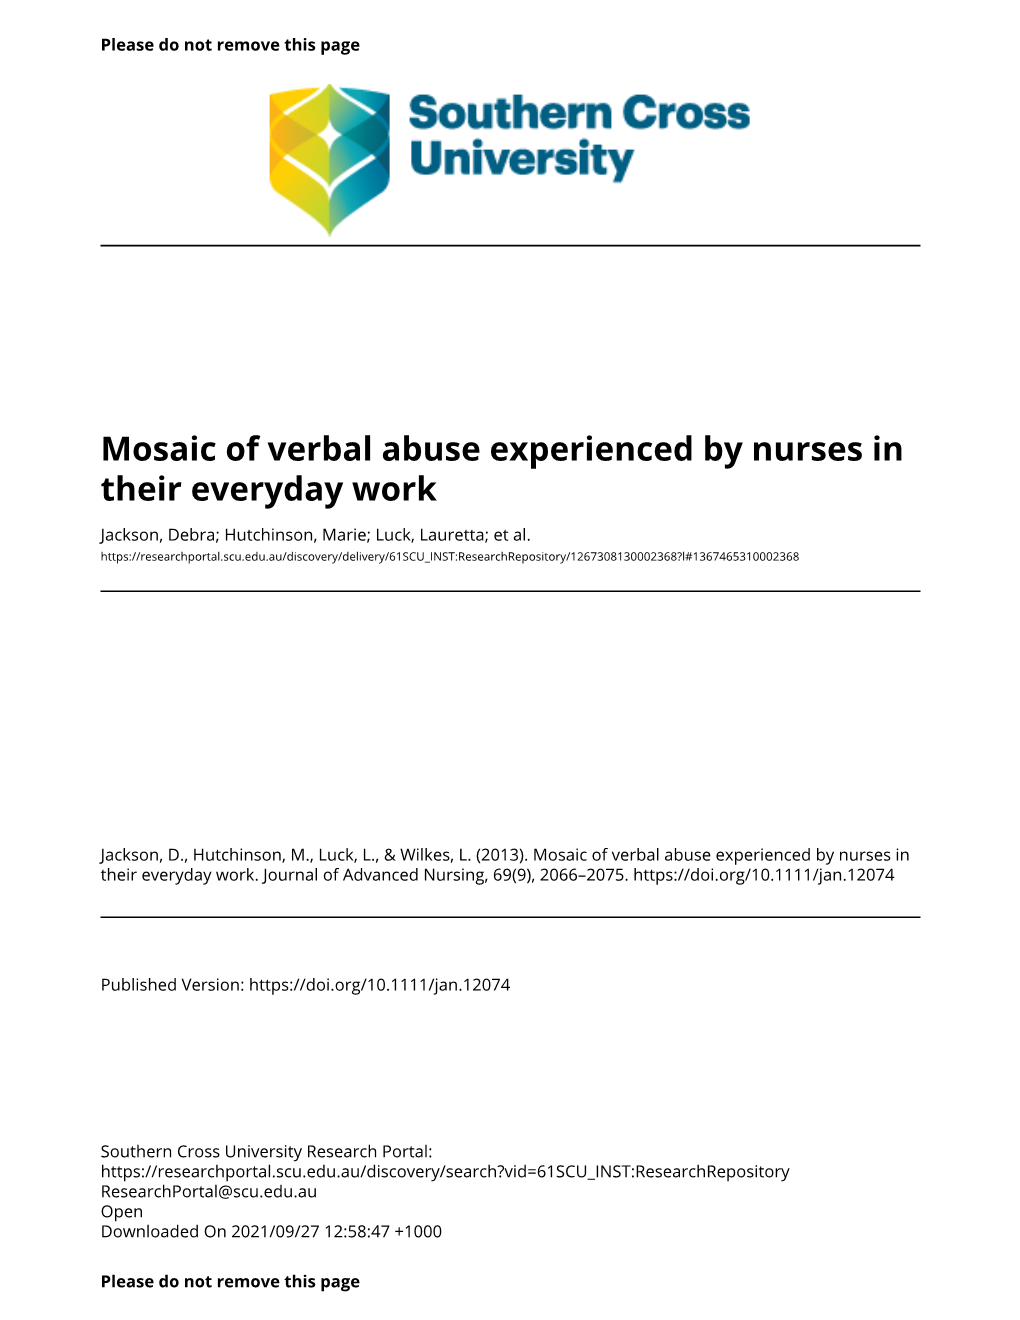 Mosaic of Verbal Abuse Experienced by Nurses in Their Everyday Work